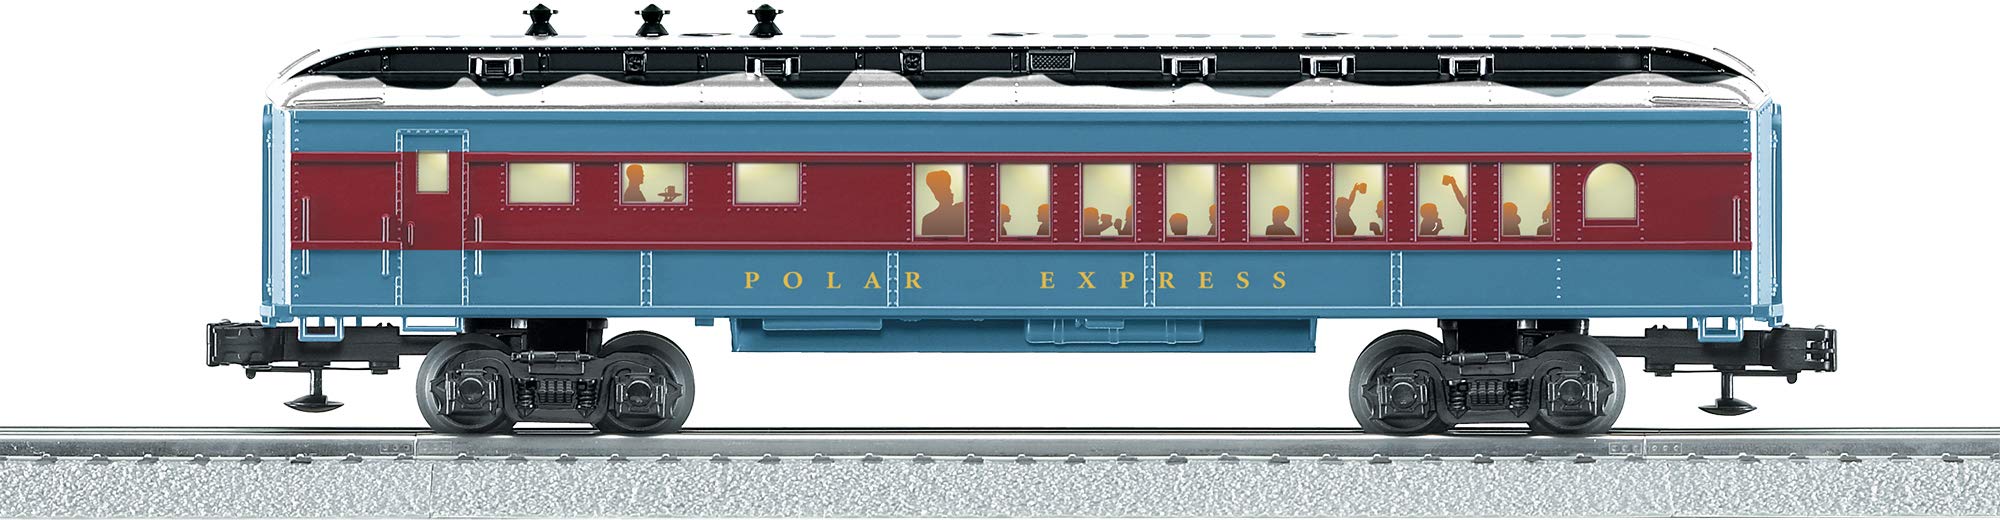 lionel polar express